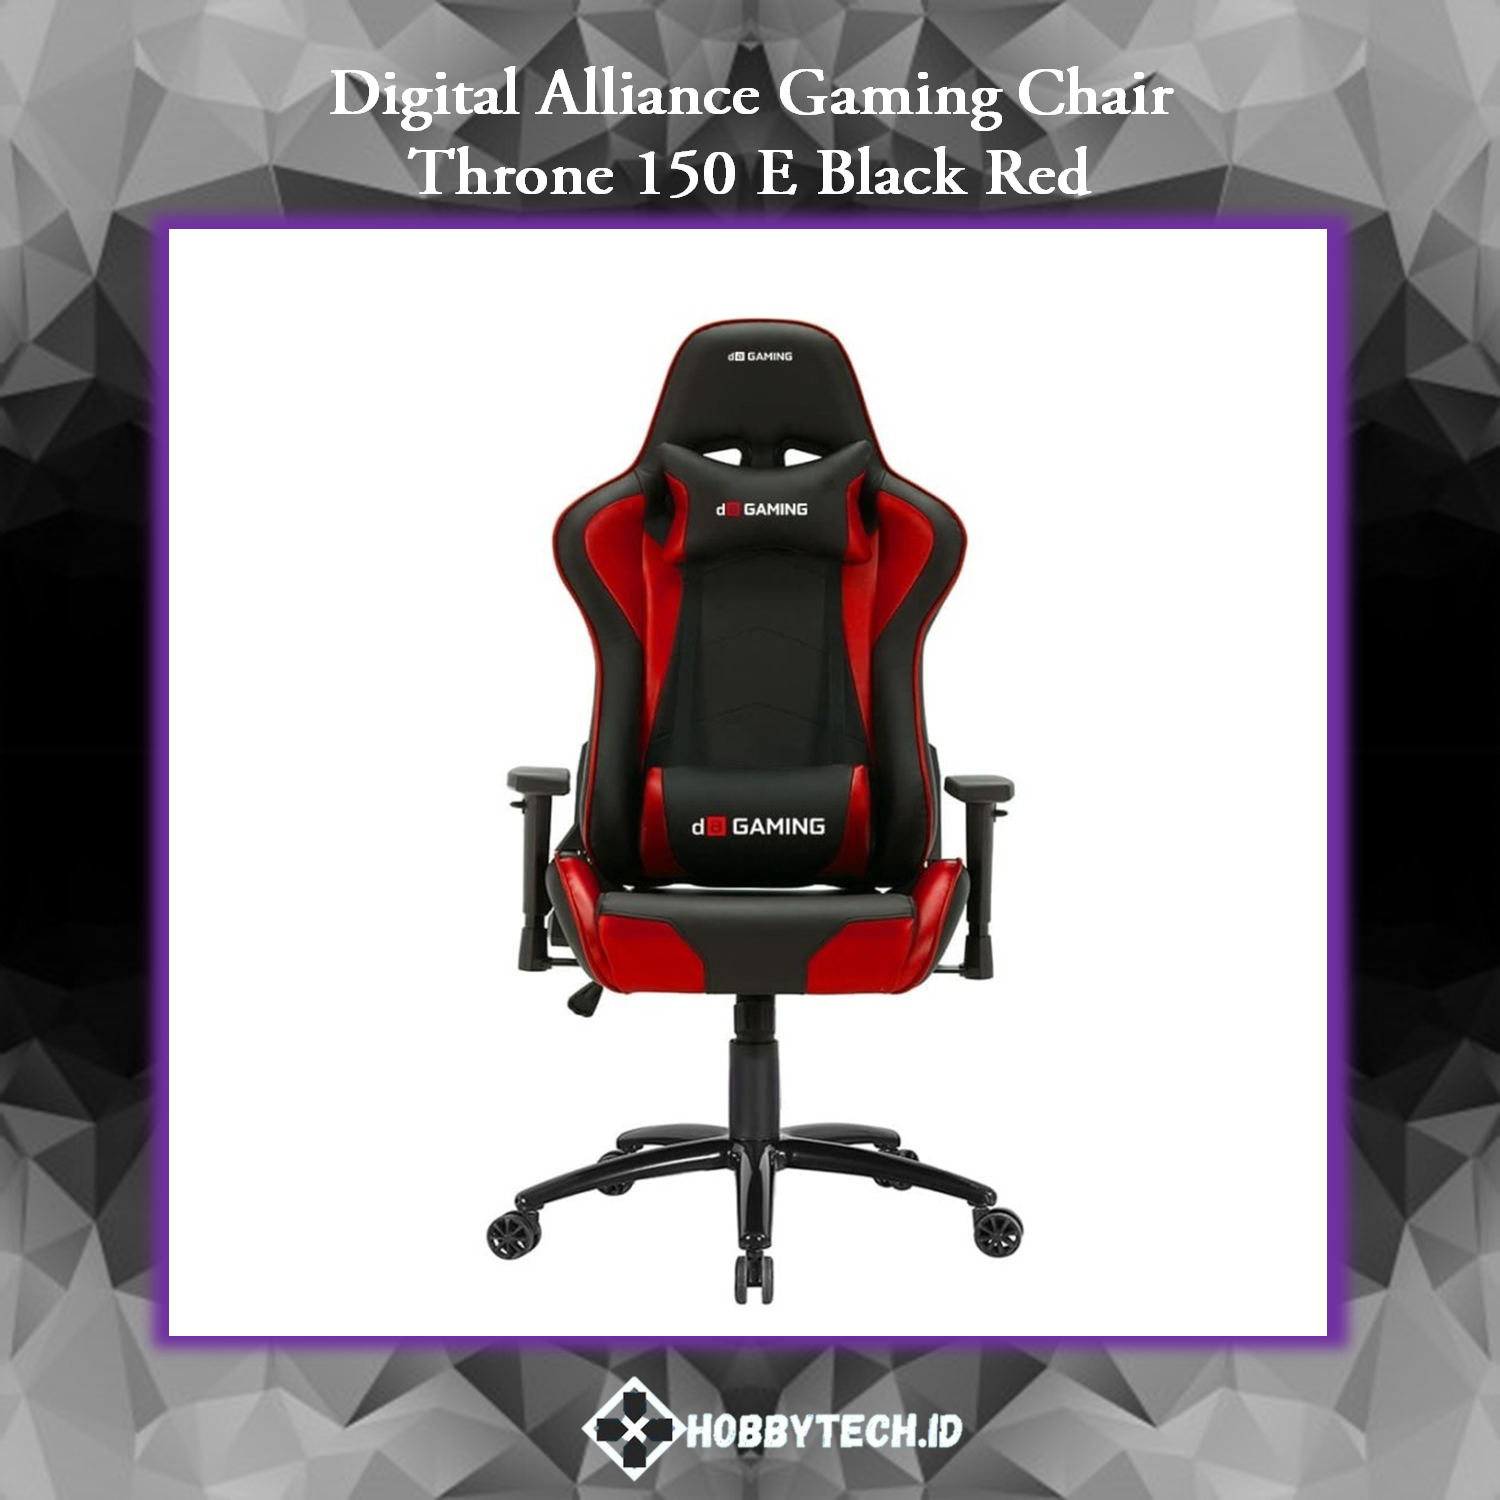 Digital Alliance Gaming Chair Throne 150 E Black Red